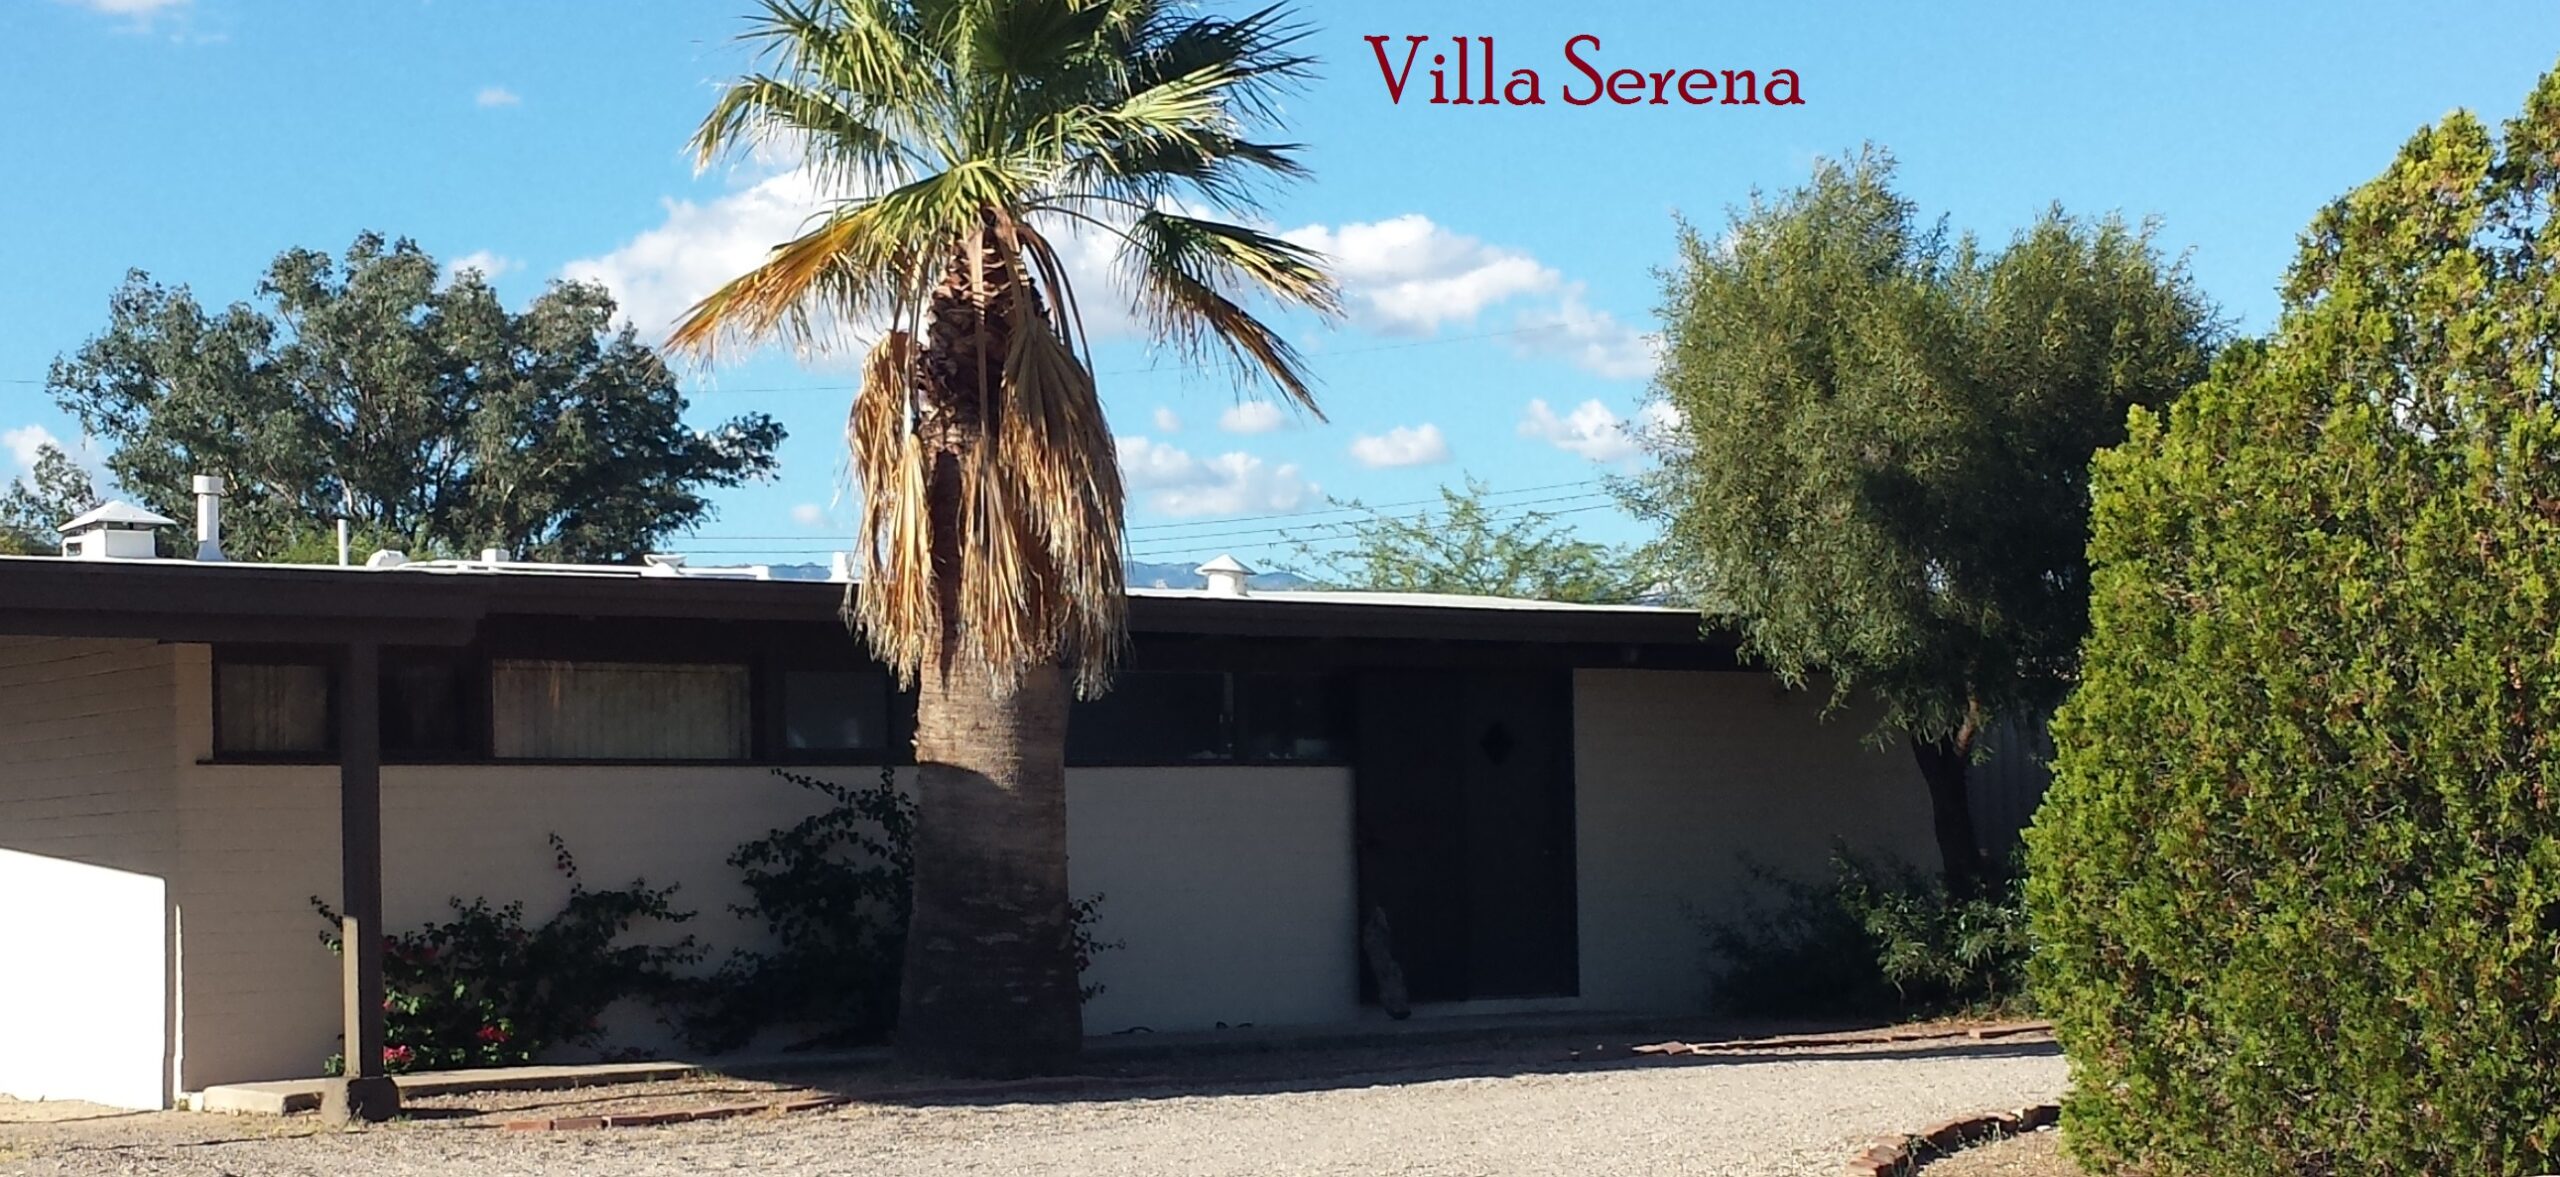 Villa Serena neighborhood in midtown Tucson